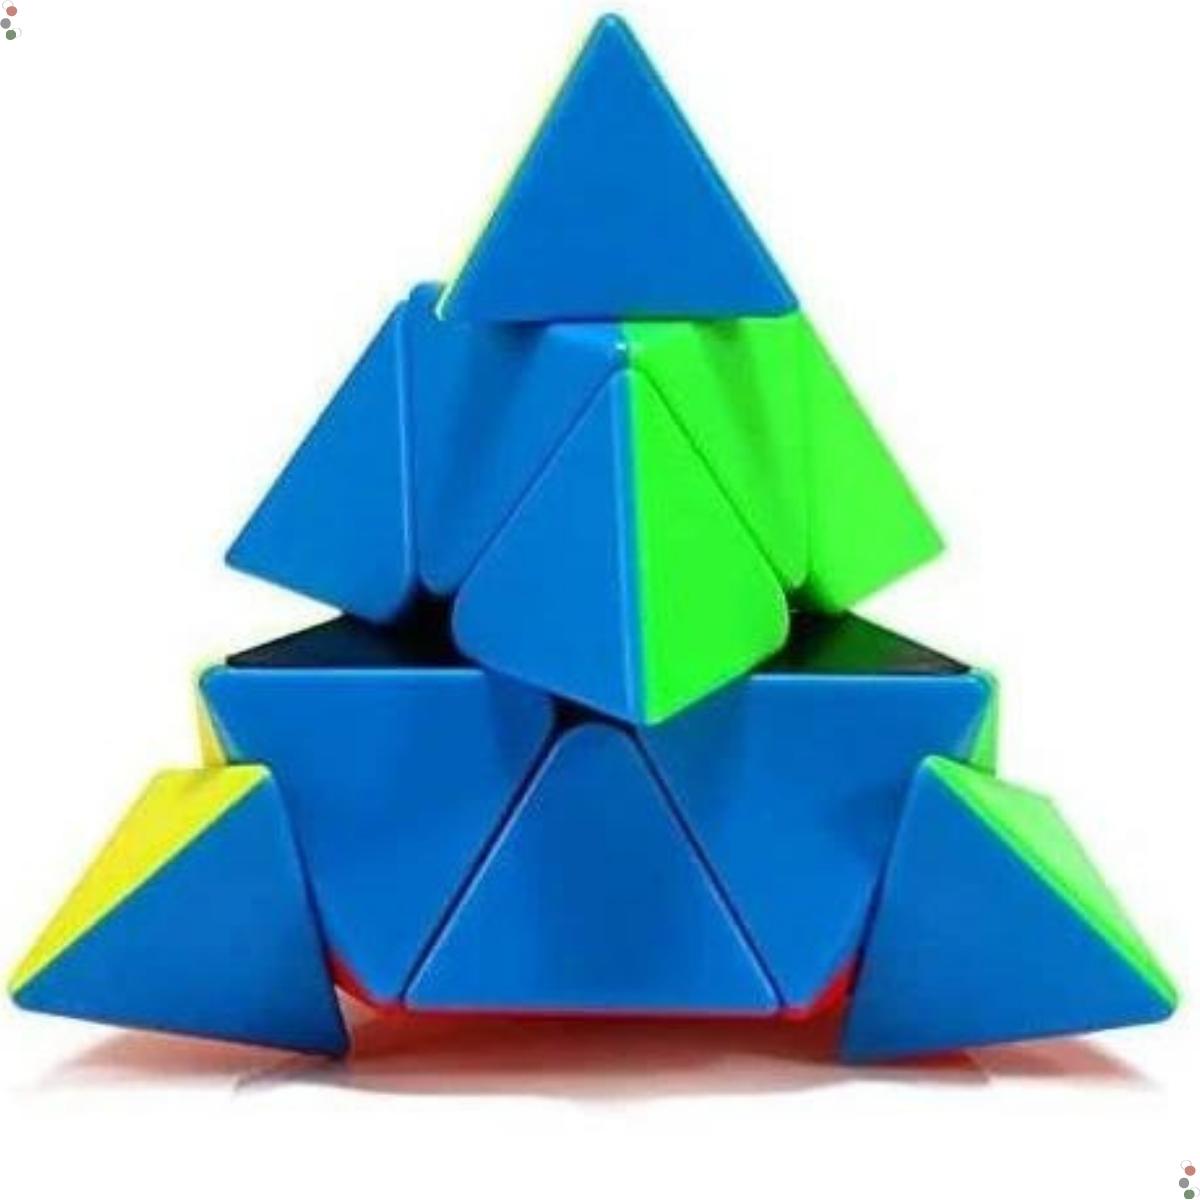 Cubo Mágico Profissional Pyraminx Moyu Pirâmide - MF8857A - Grupo Solmaior